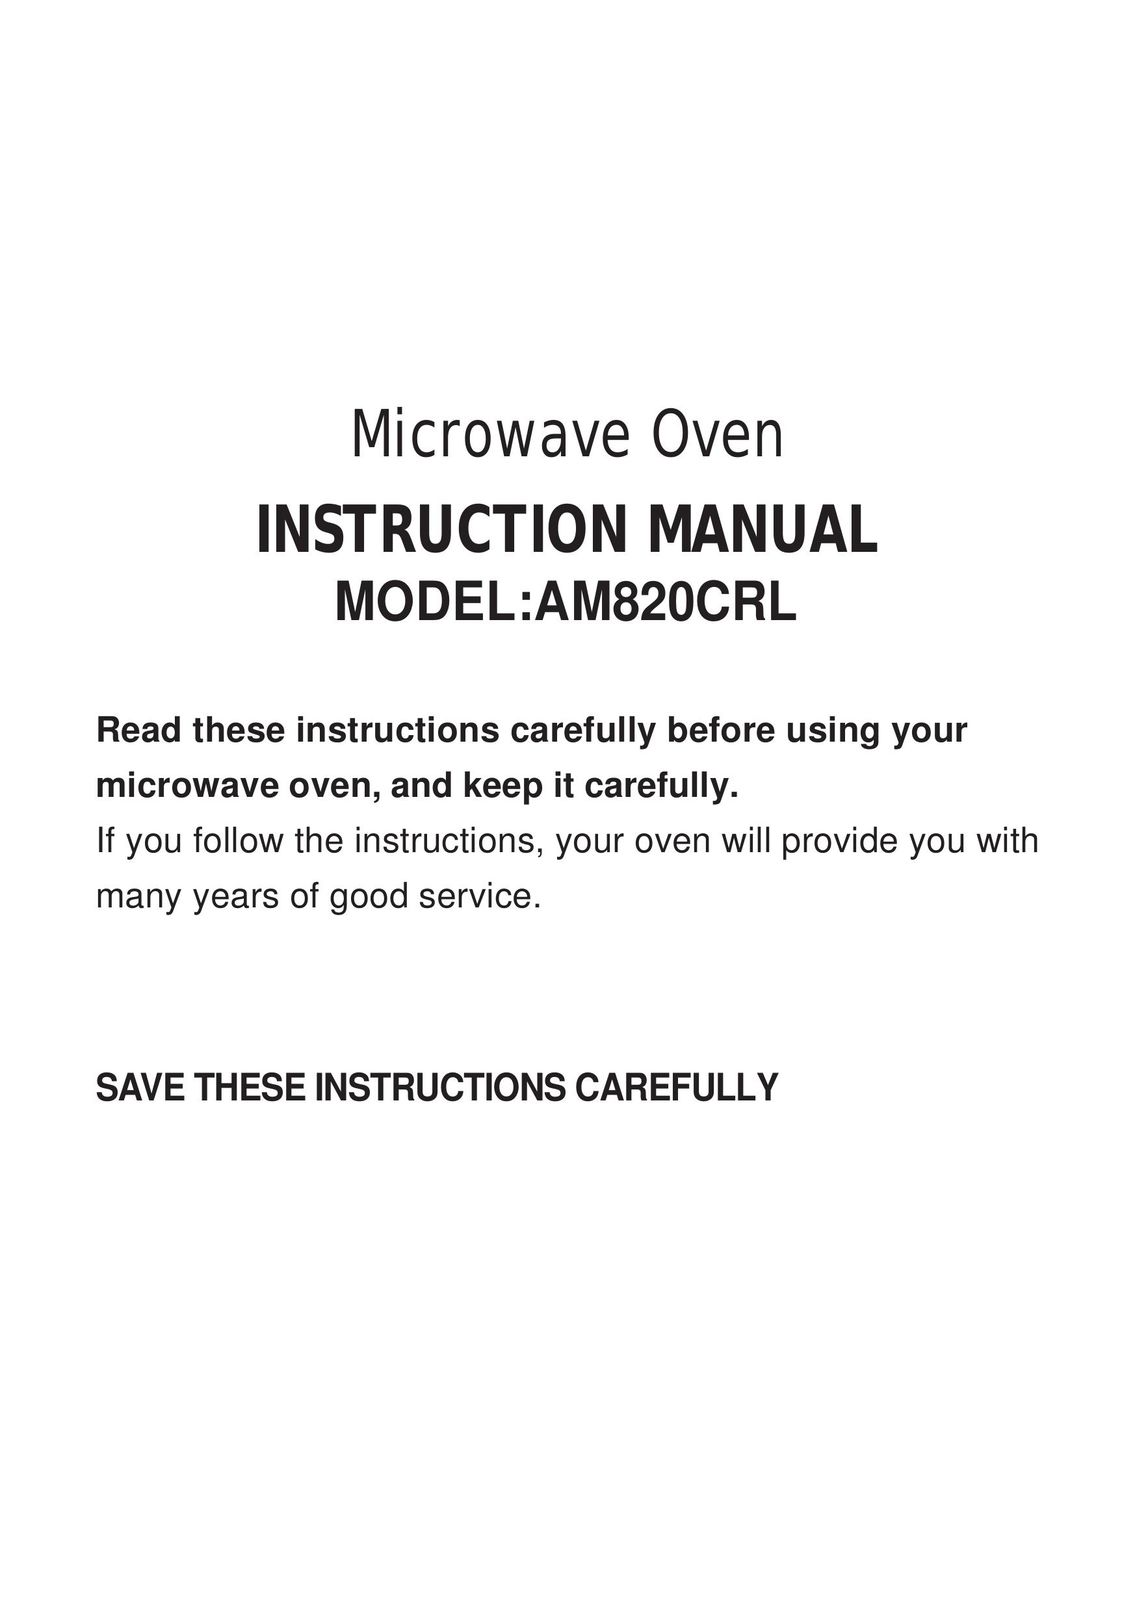 Akai AM820CRL Microwave Oven User Manual